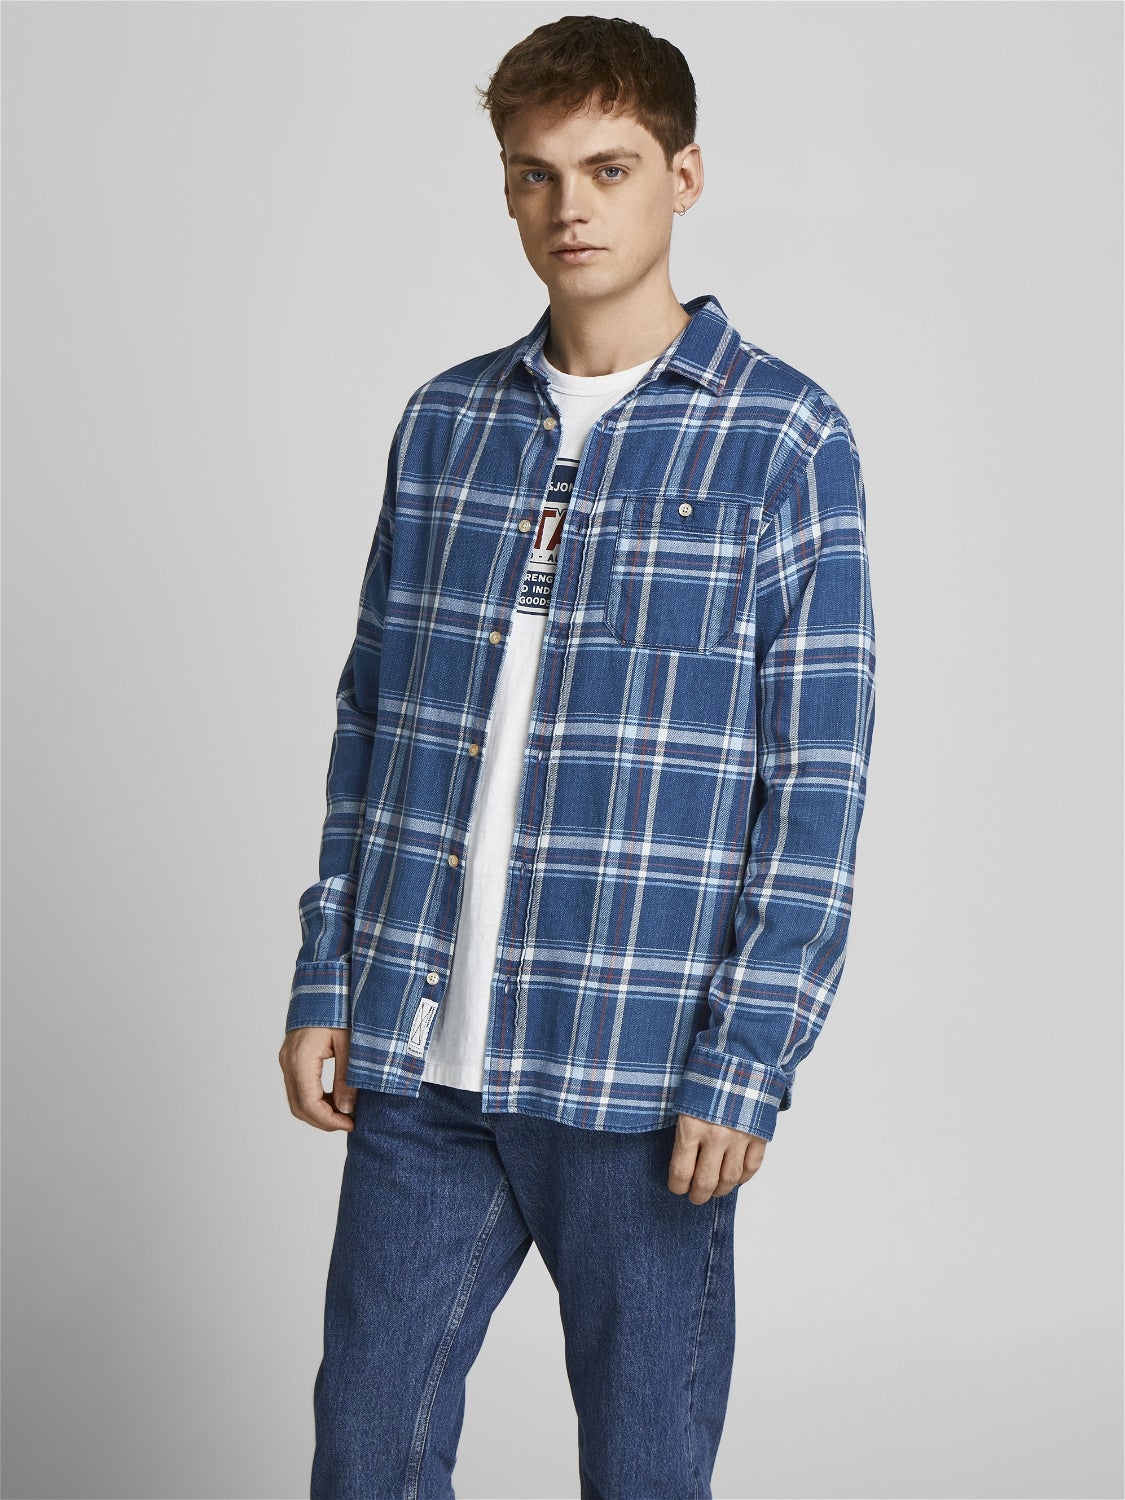 Blu L MODA UOMO Camicie & T-shirt Jeans Jack & Jones Camicia sconto 51% 